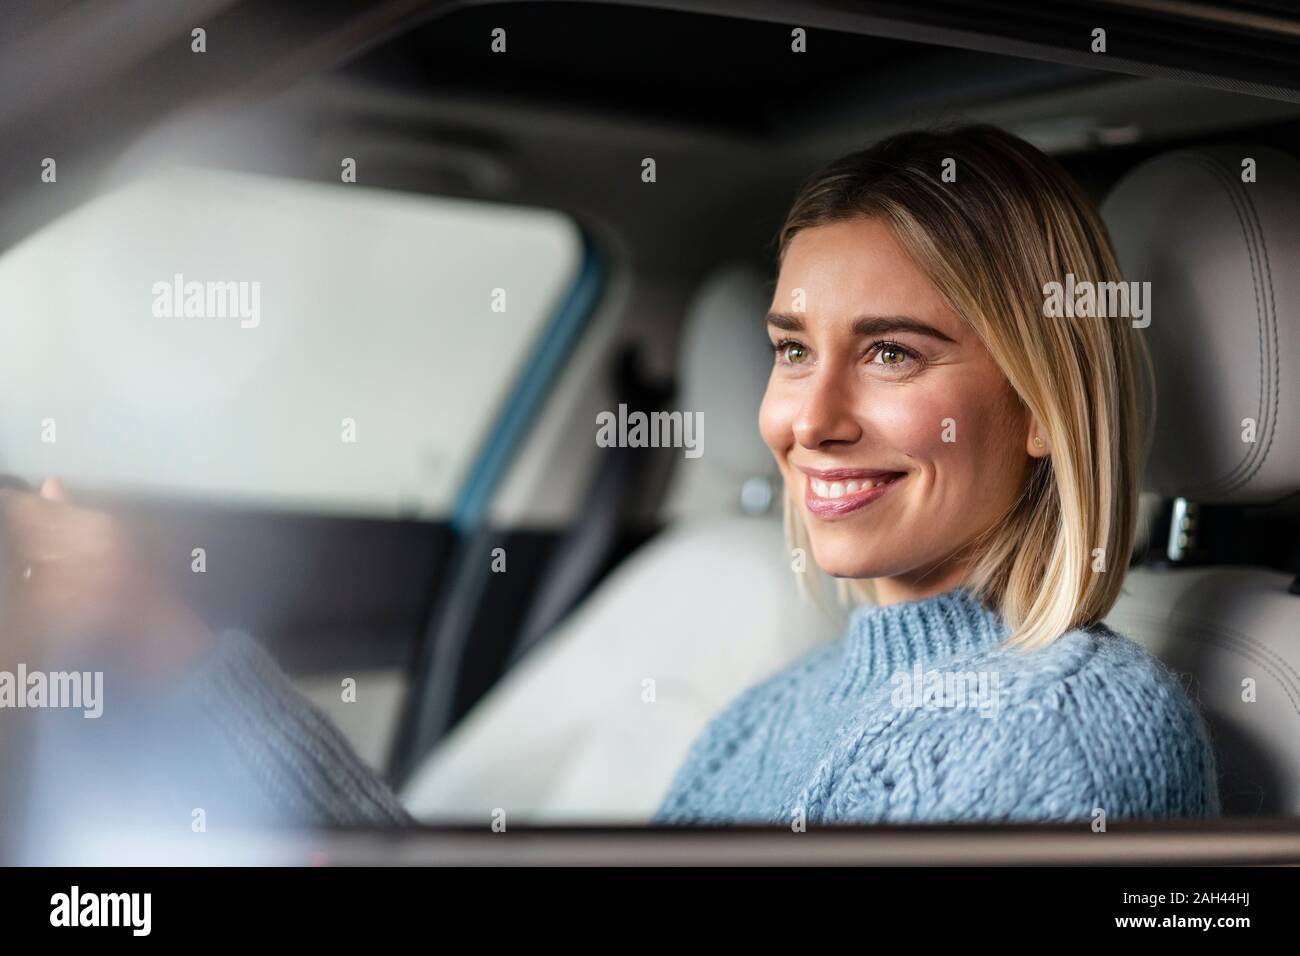 Portrait of smiling young woman driving a car Banque D'Images